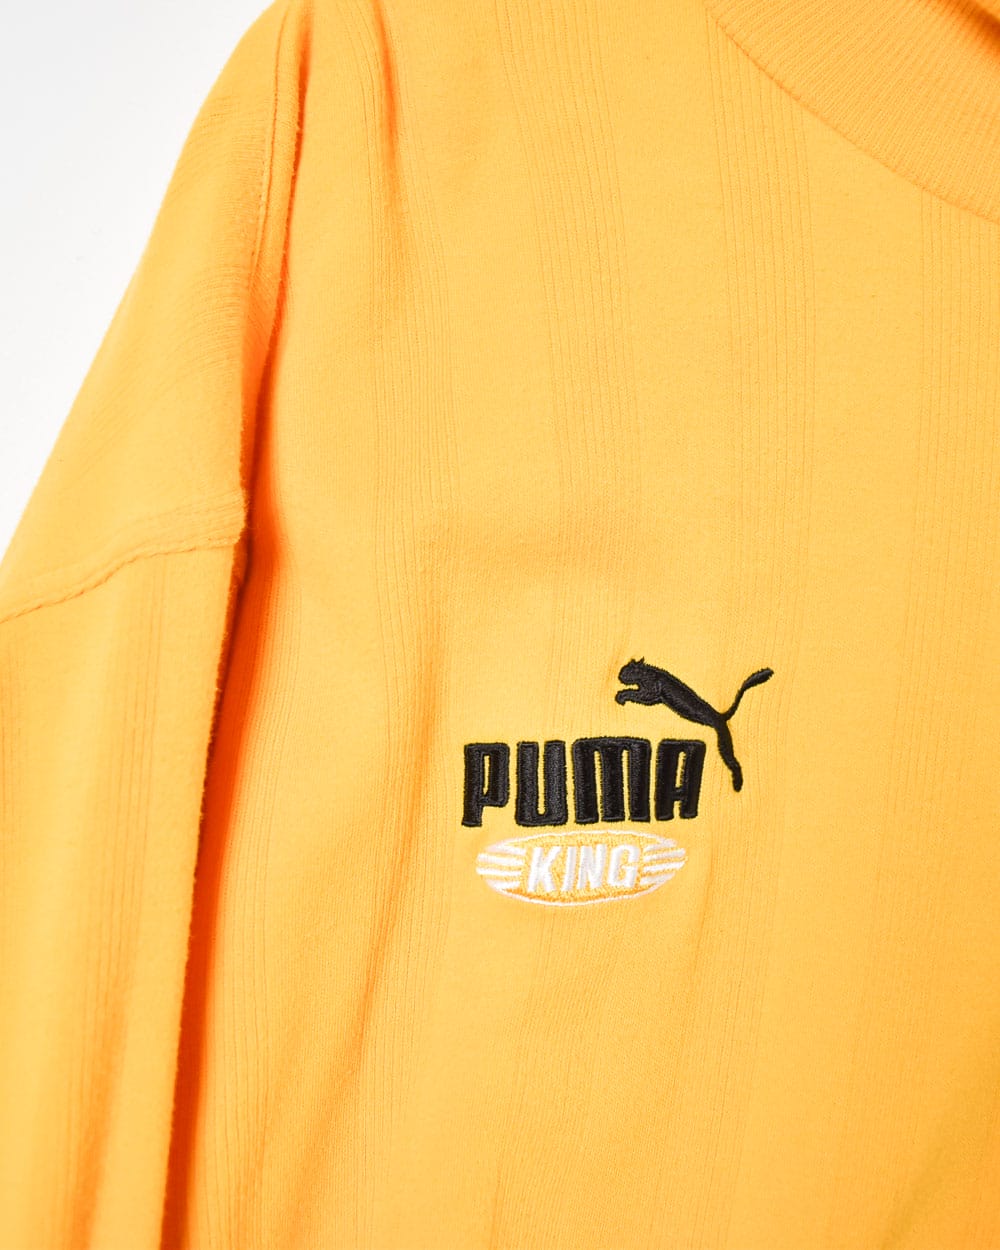 Yellow Puma King Turtle Neck Sweatshirt - X-Large